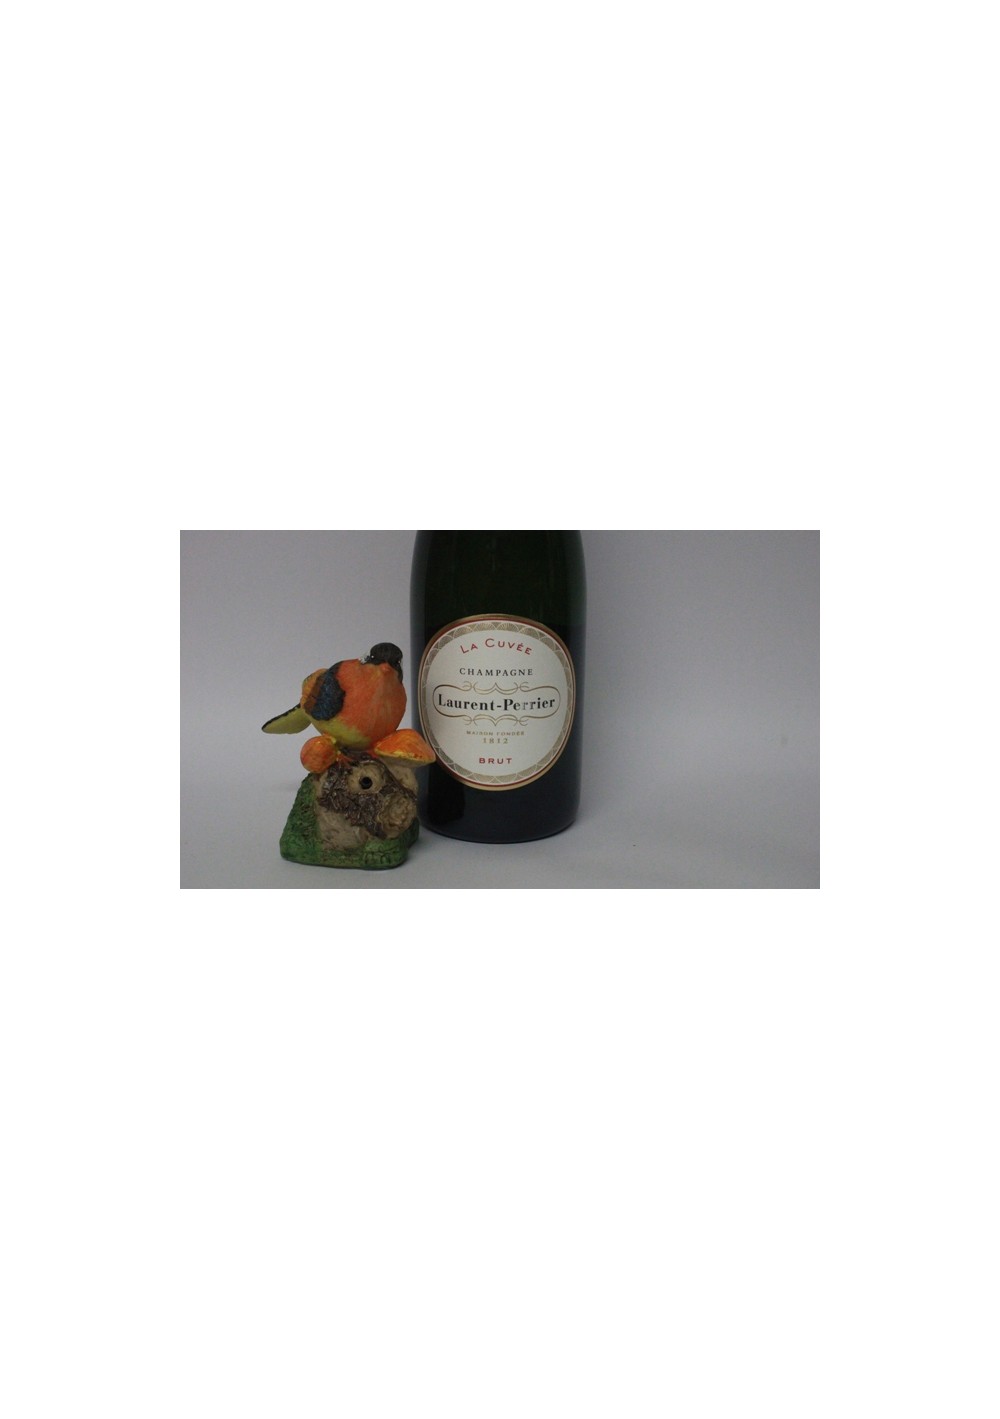 Champagne Laurent Perrier Brut - Balthazar